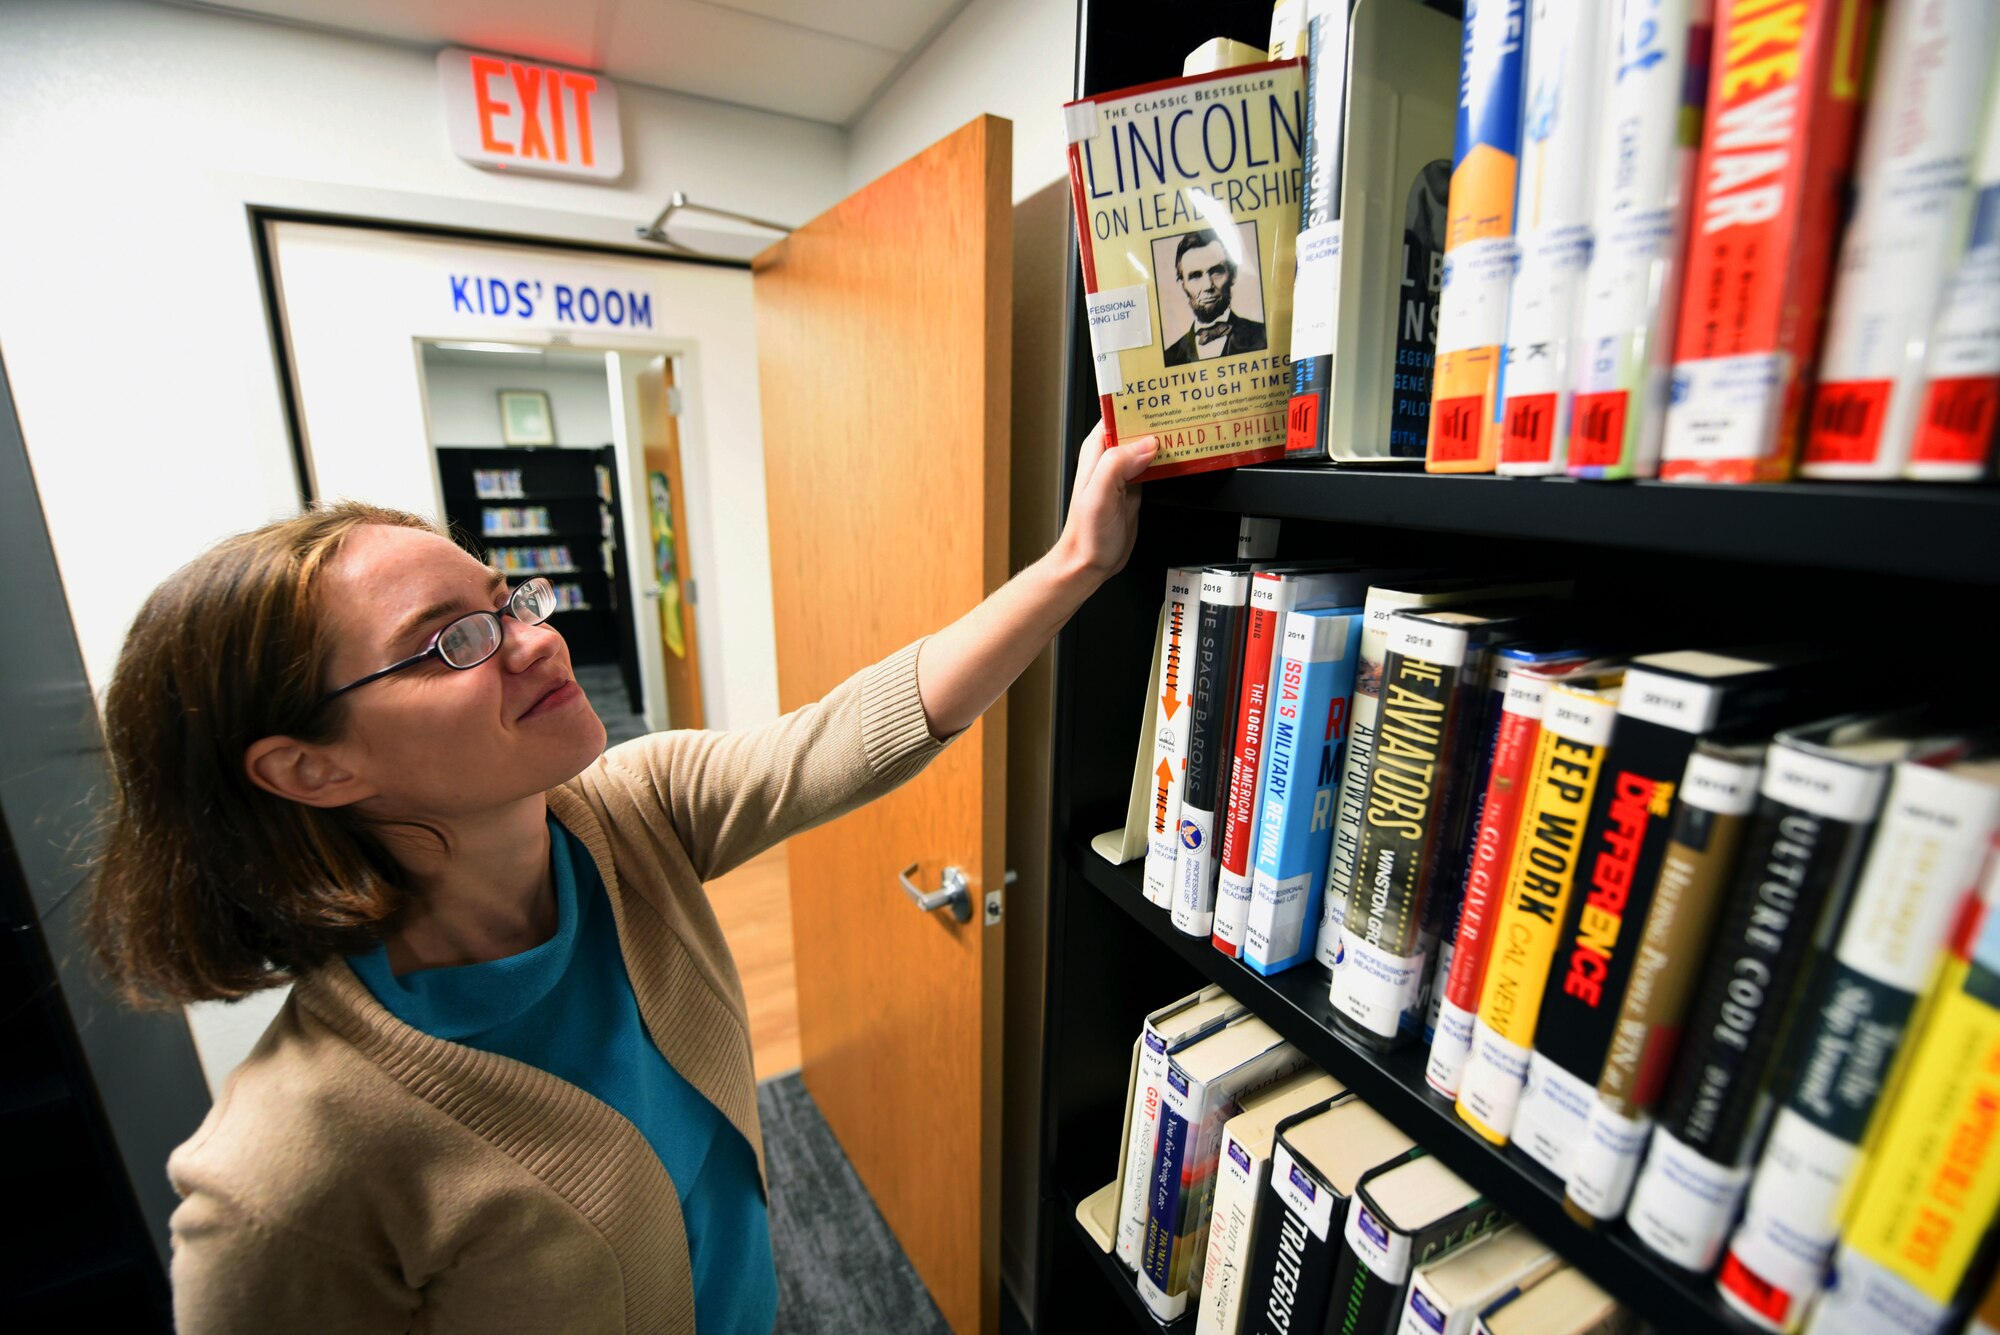 Librarian puts books away